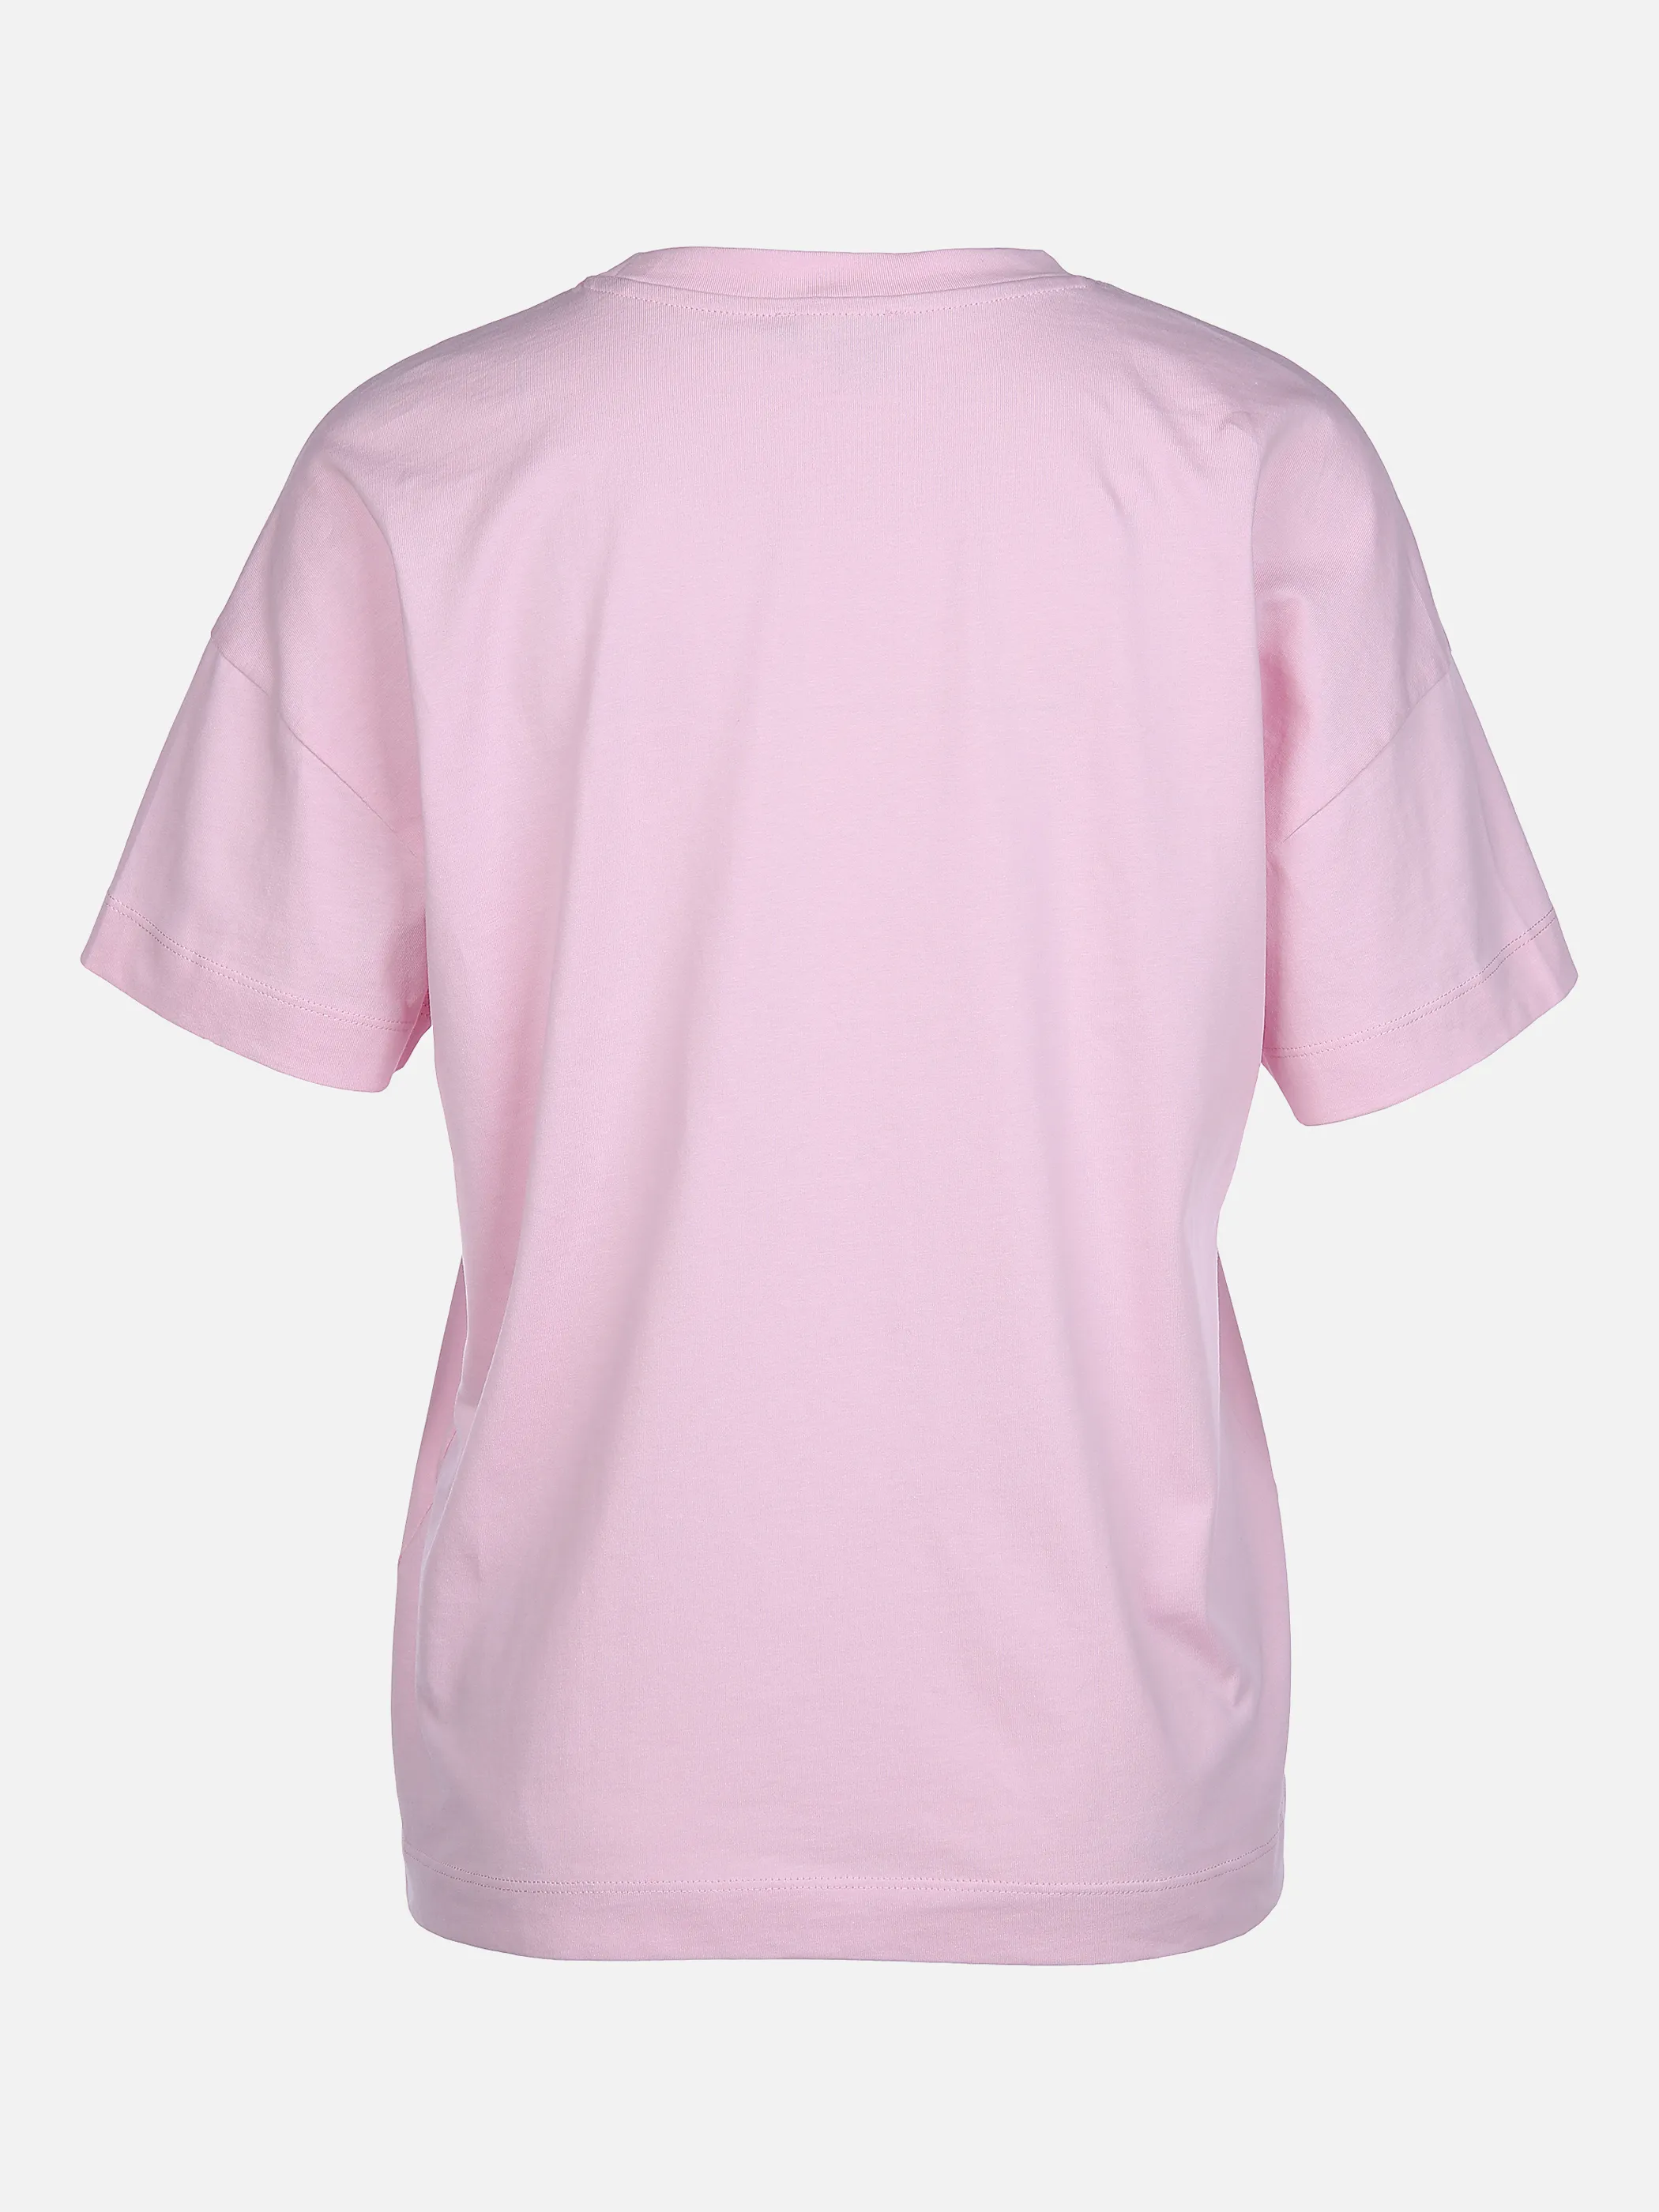 Esprit 052EE1K351 SUS tshirt aw Pink 865399 E690 2